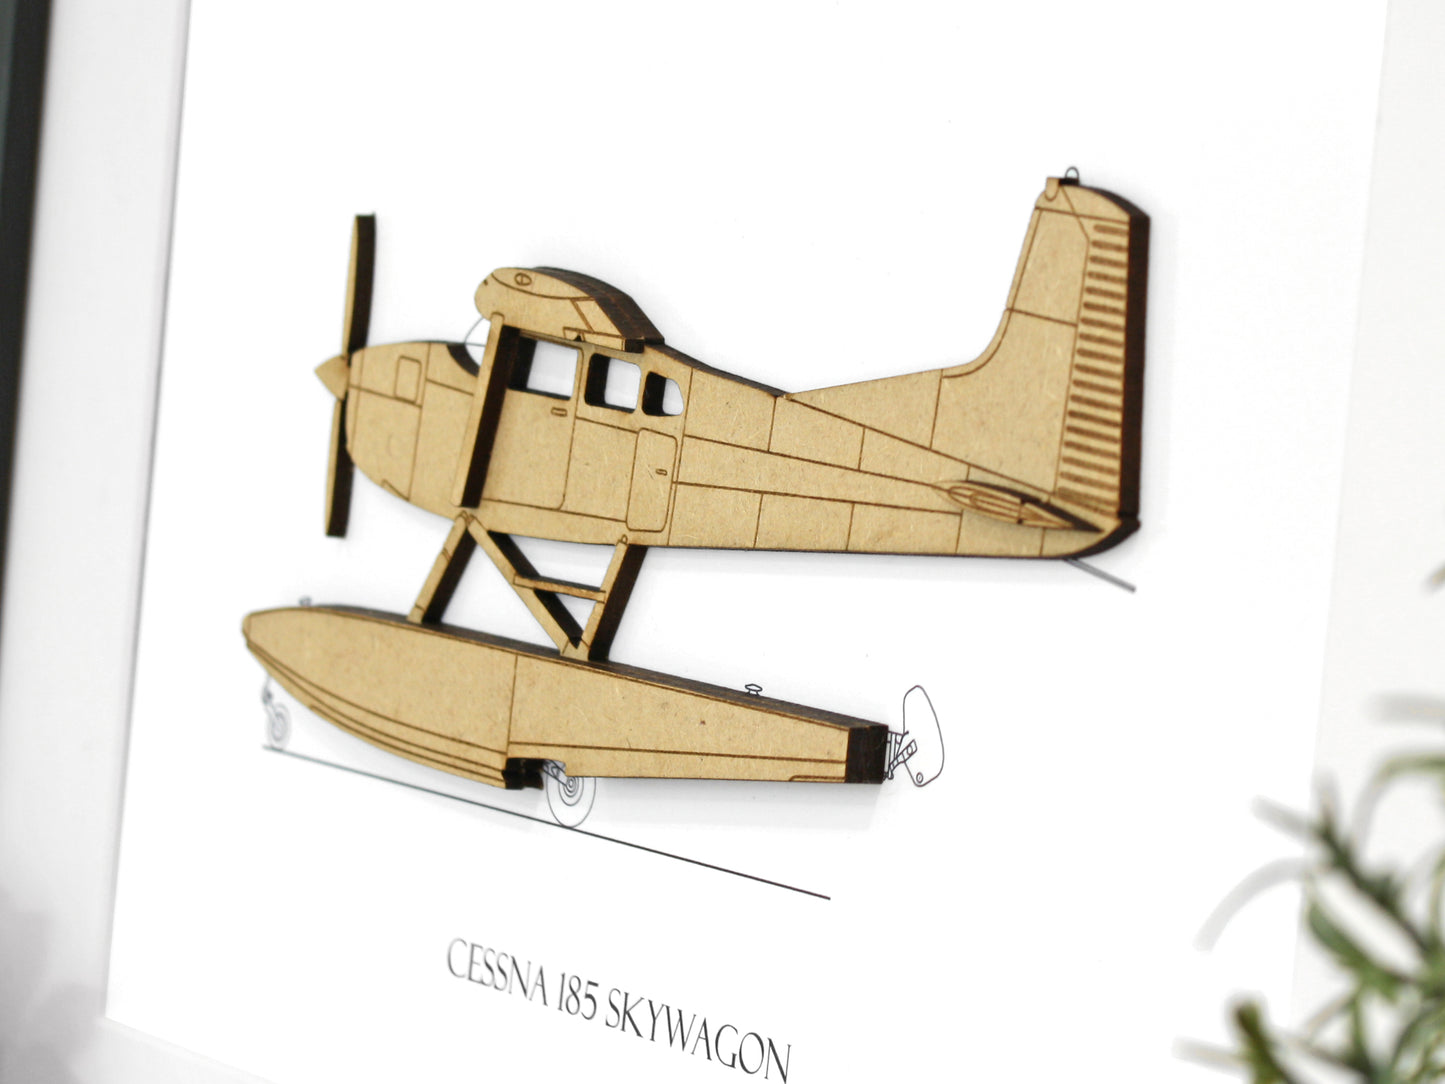 Cessna 185 Skywagon floatplane art